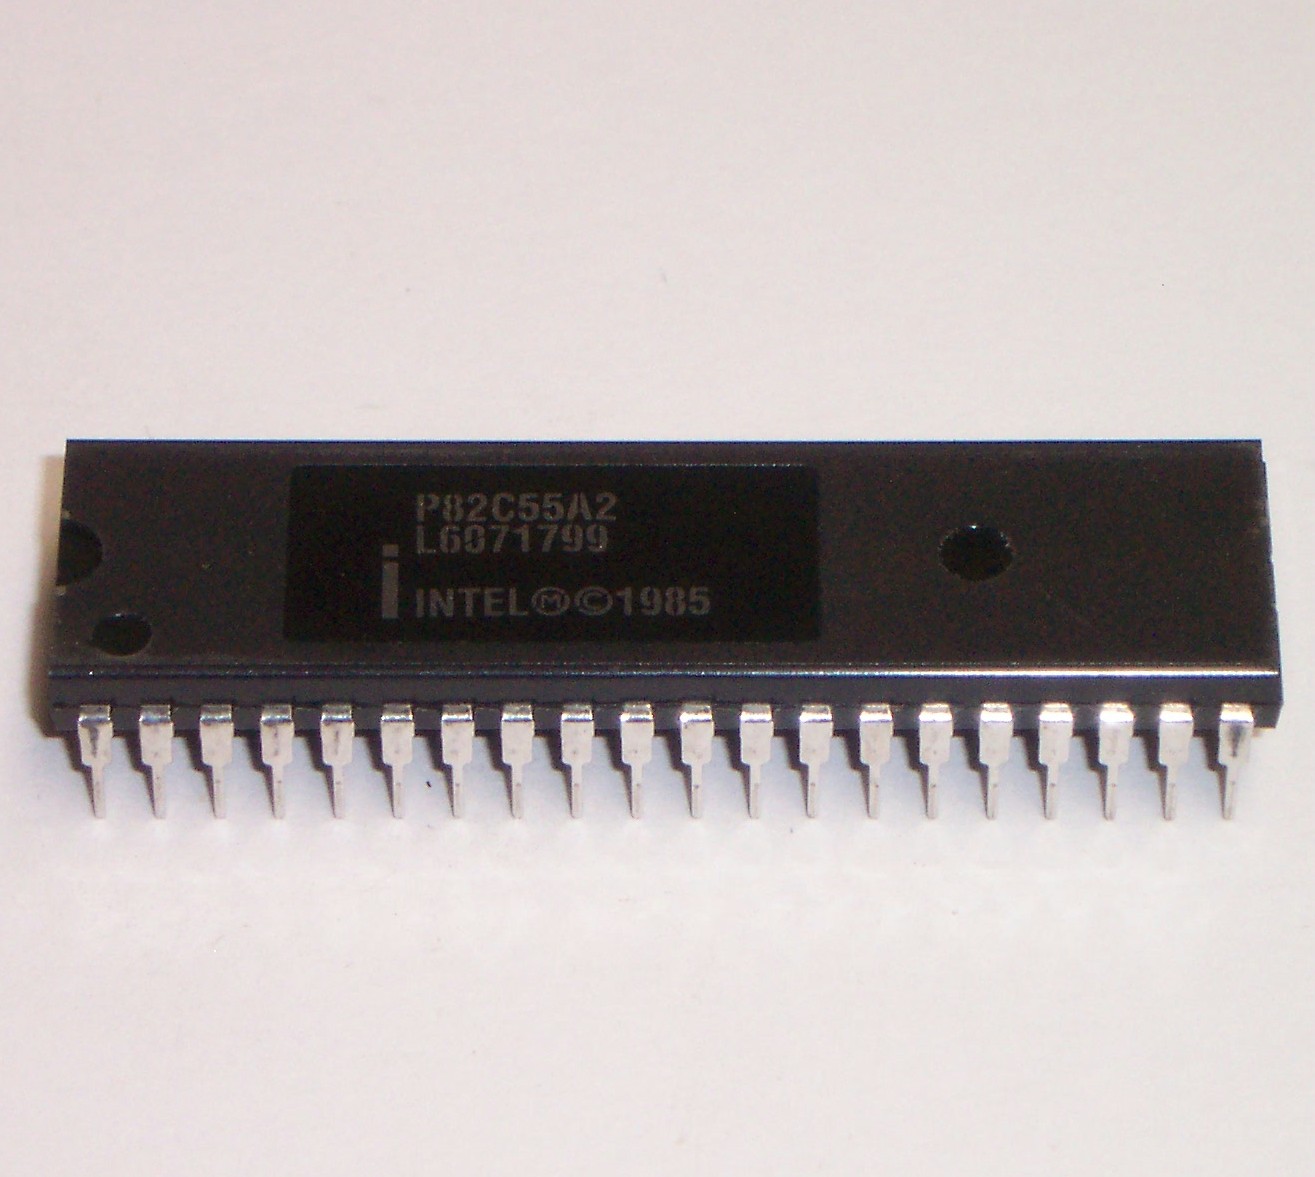 1PCS/5PCS P82C55A-2 P82C55 82C55A DIP-40 Programmable Peripheral Interface 